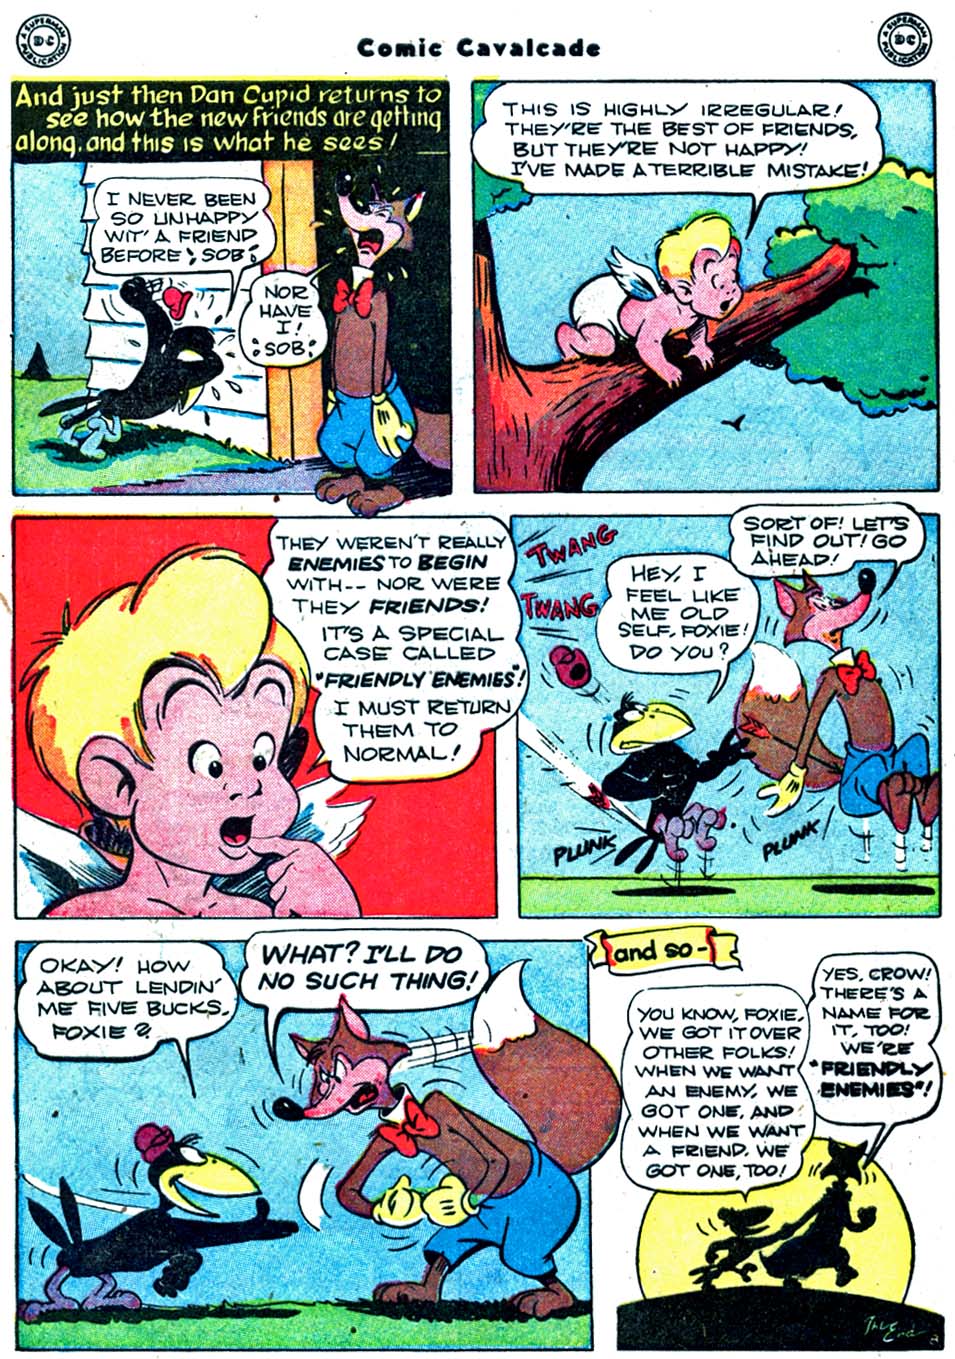 Comic Cavalcade issue 32 - Page 10